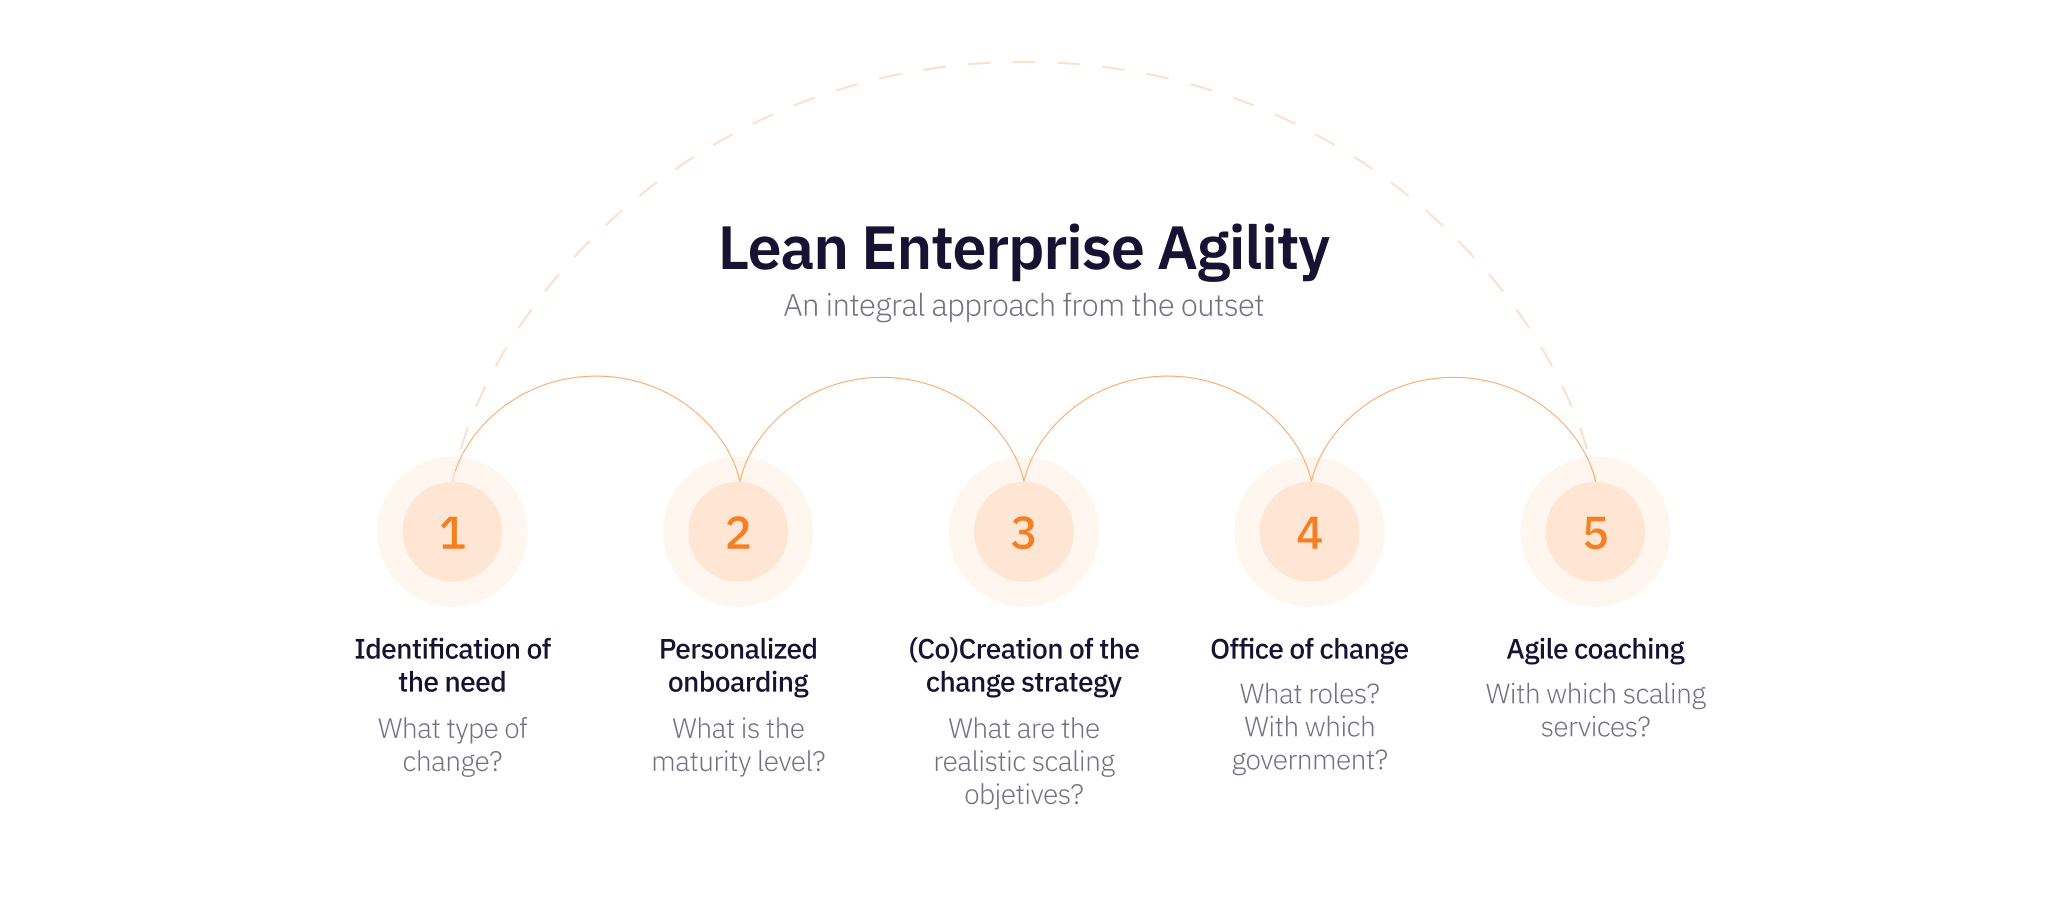 Lean Enterprise Agility steps